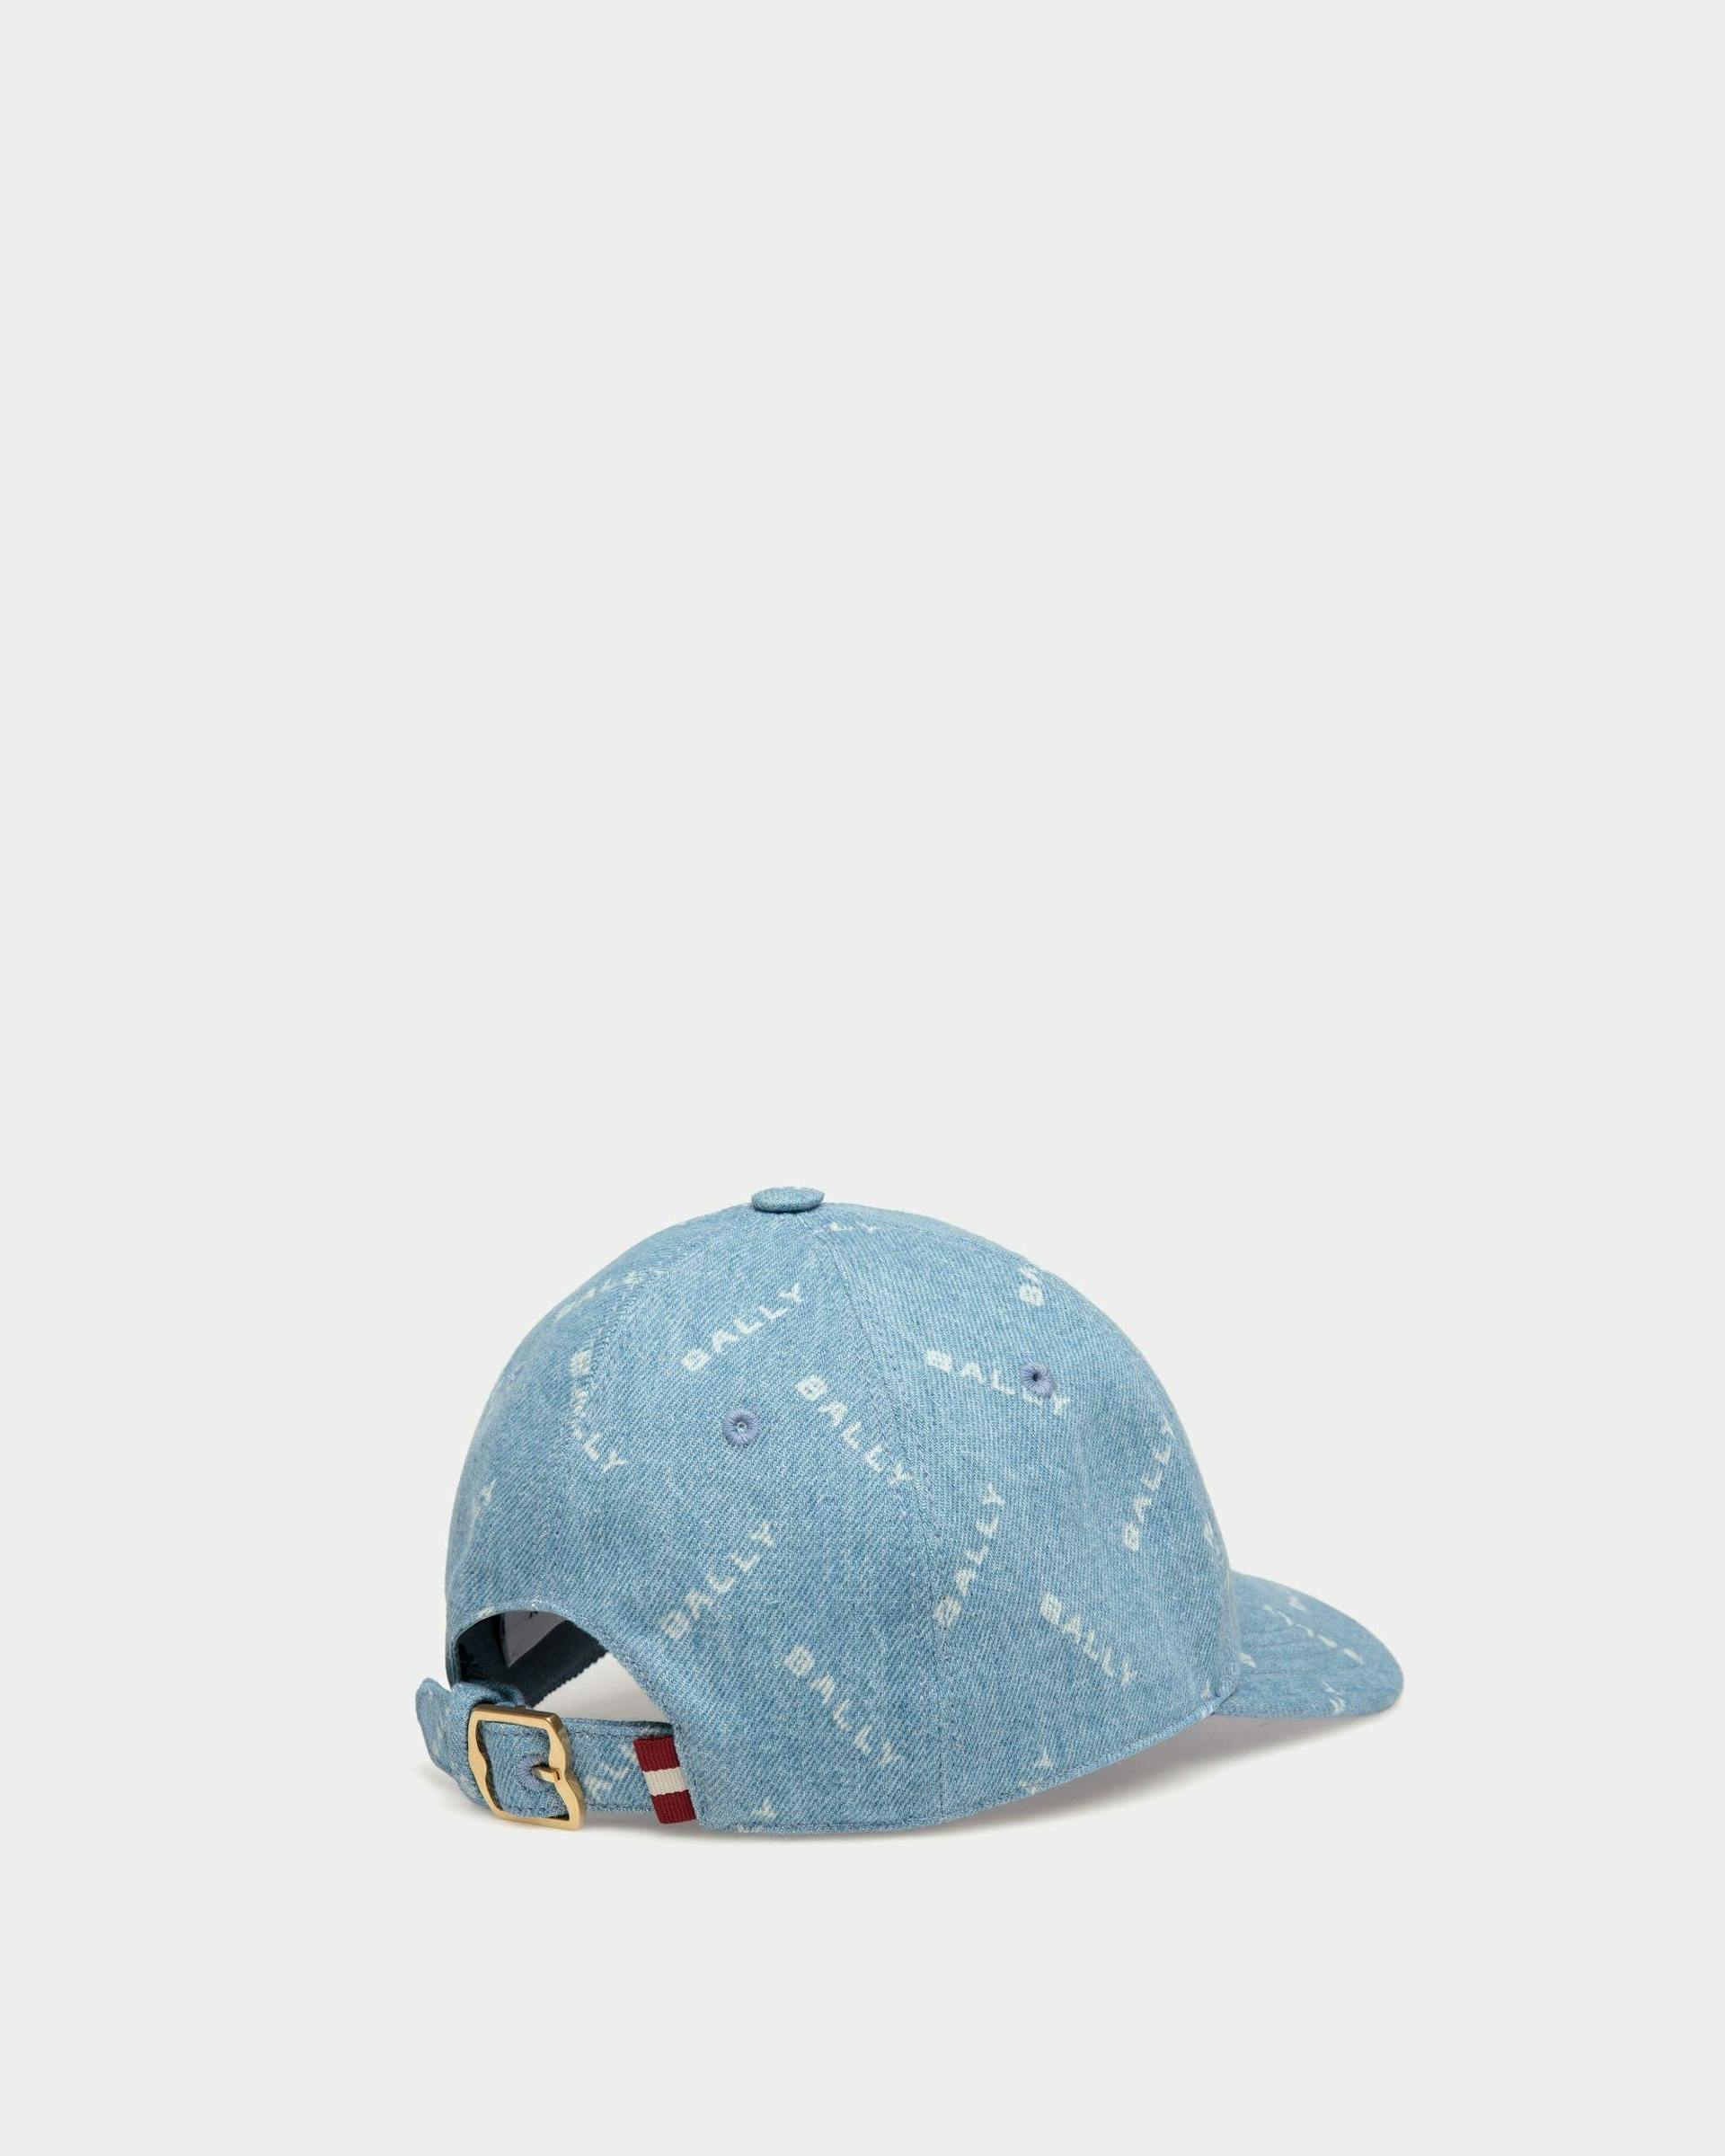 Men's Baseball Hat In Light Blue Cotton | Bally | Still Life 3/4 Back